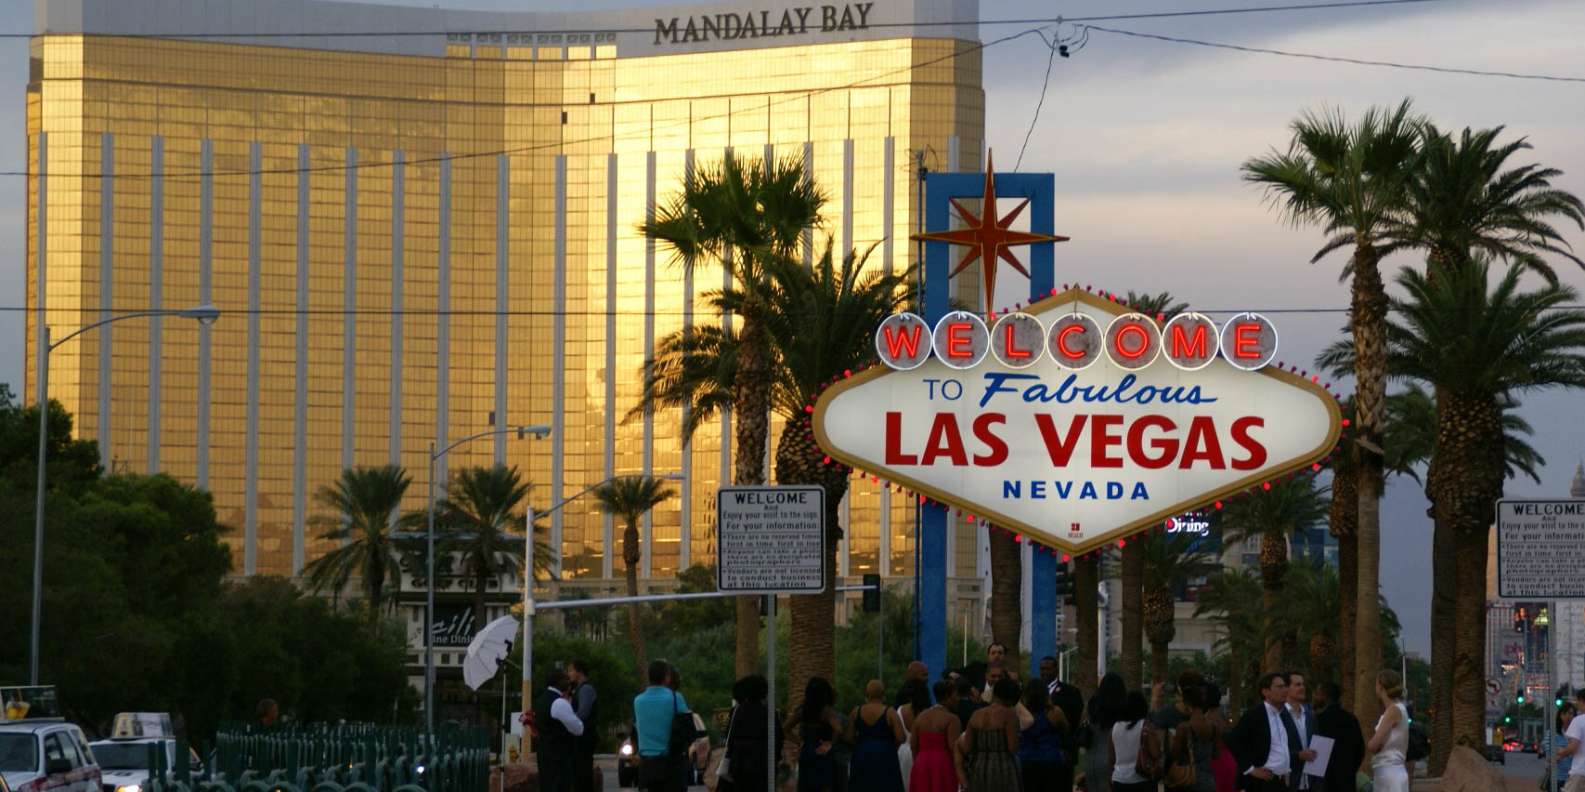 Welcome to Fabulous Las Vegas sign, Las Vegas - Book Tickets & Tours